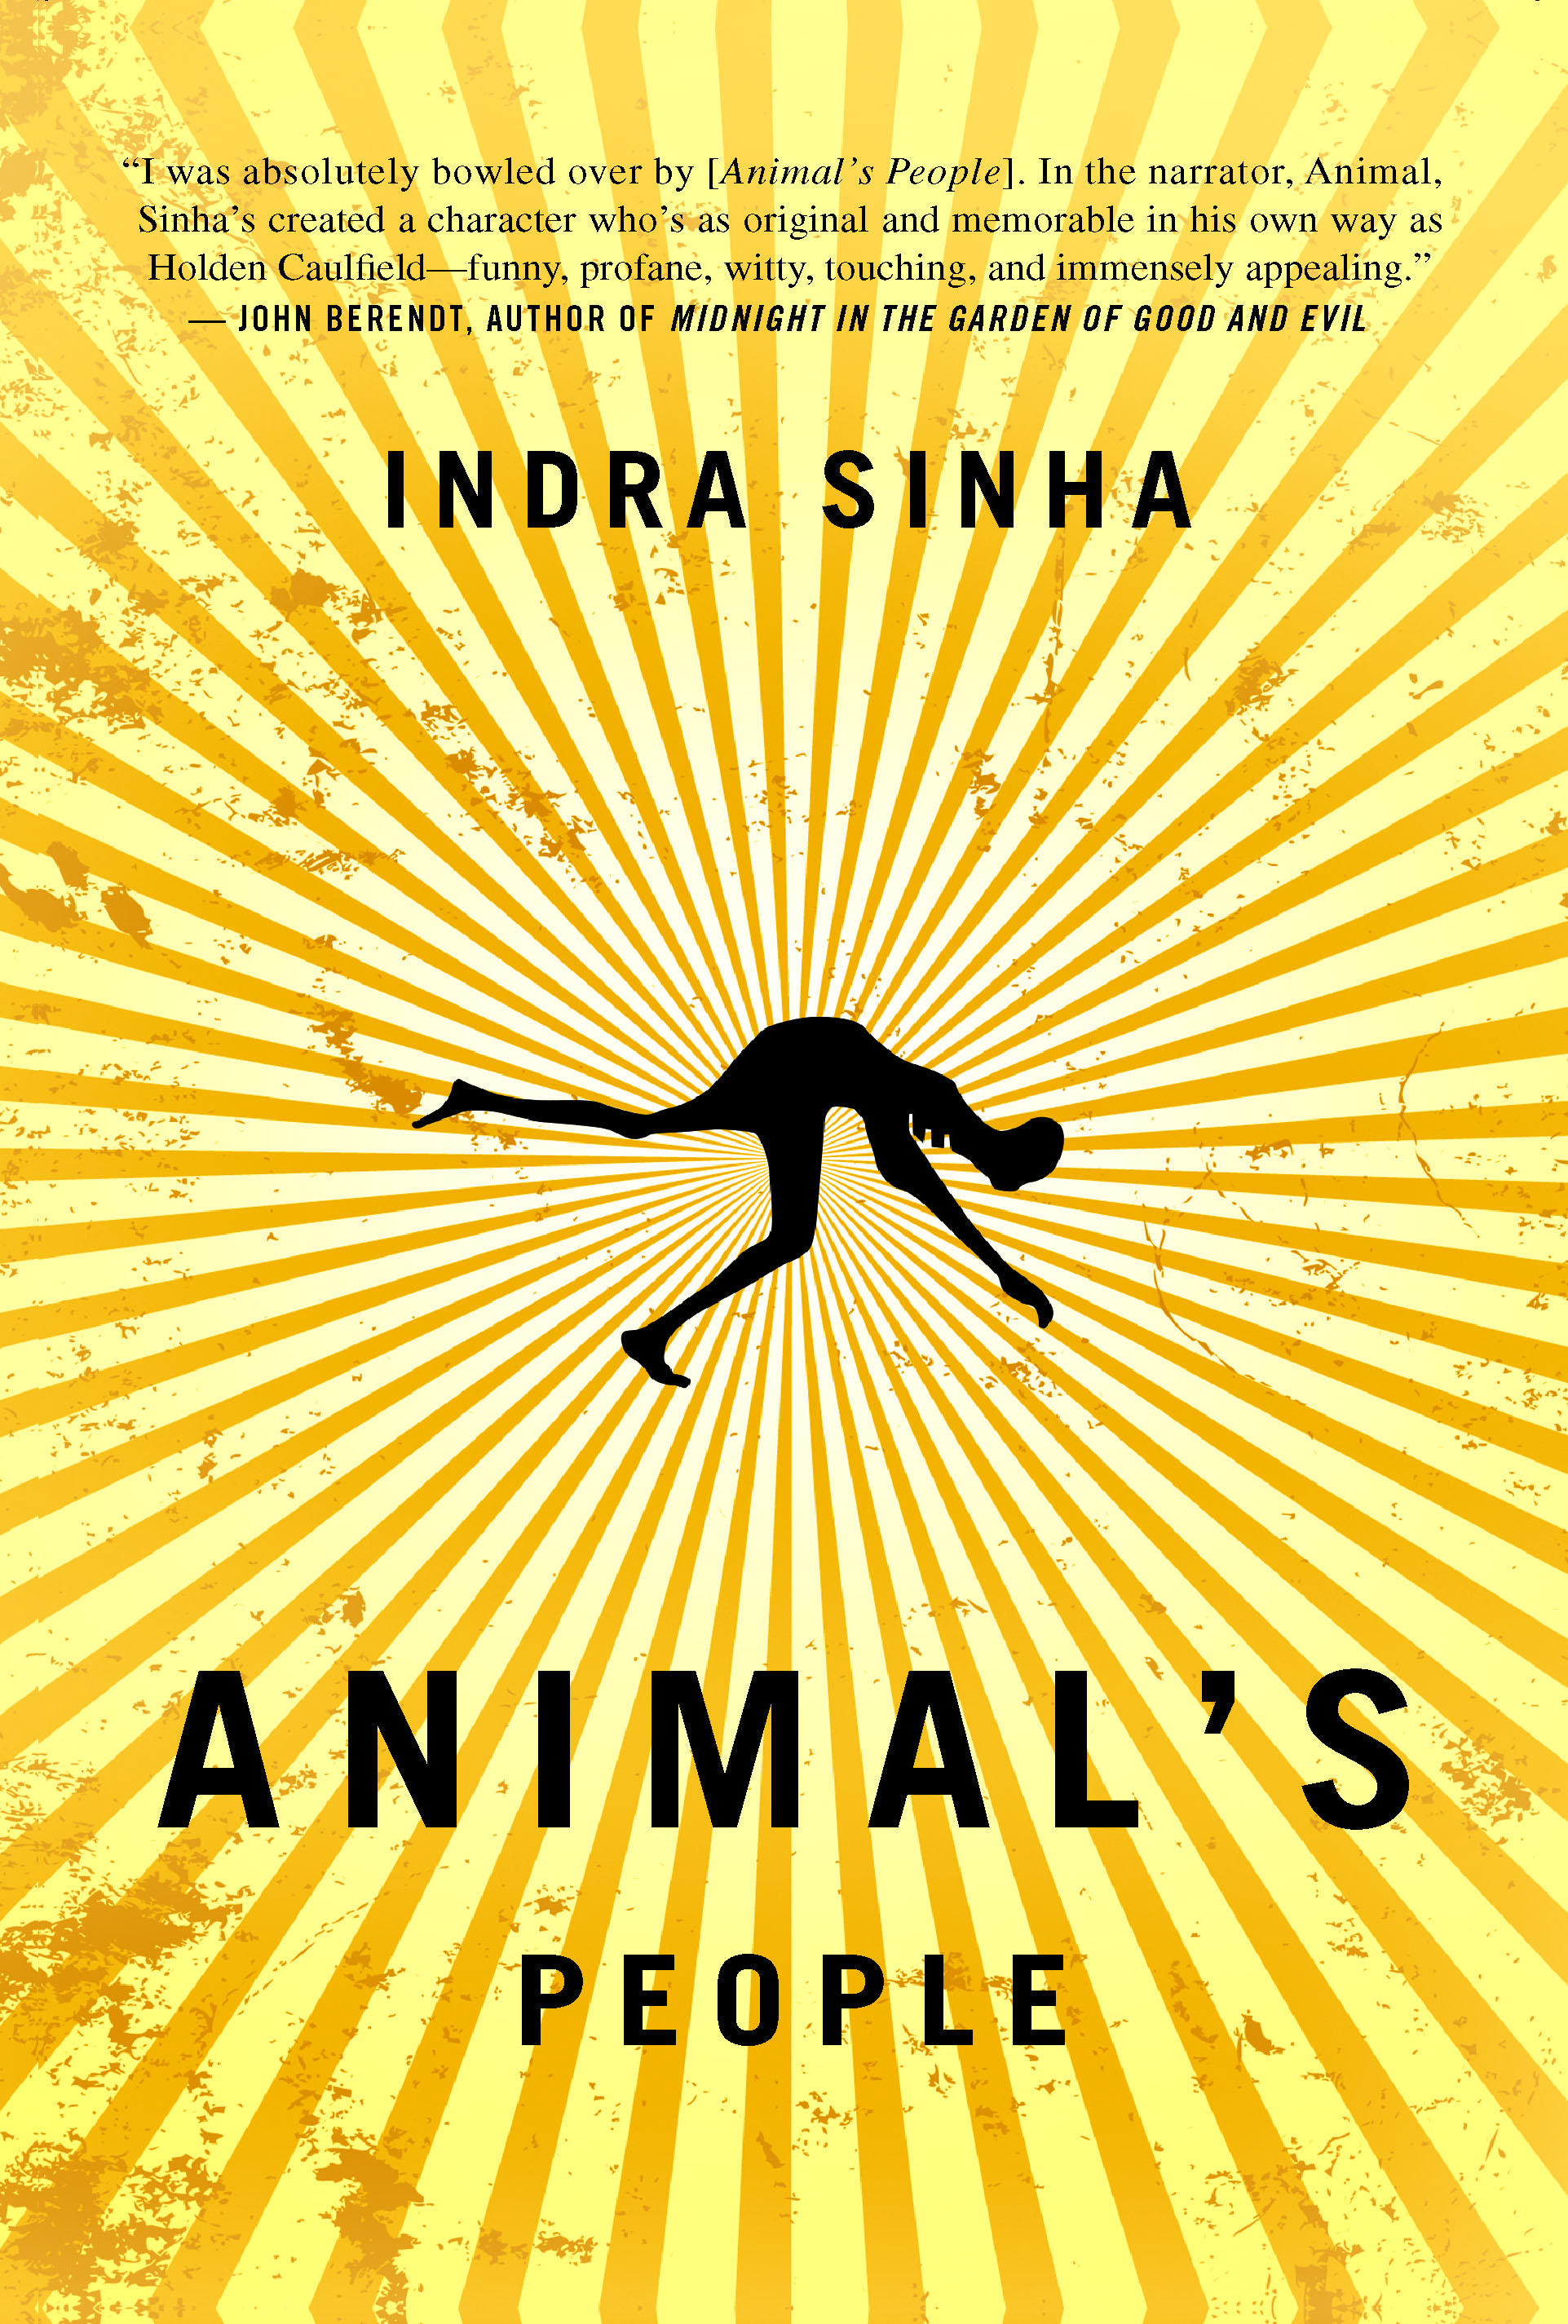 Indra Sinha: Animal's people (2007, Simon & Schuster)